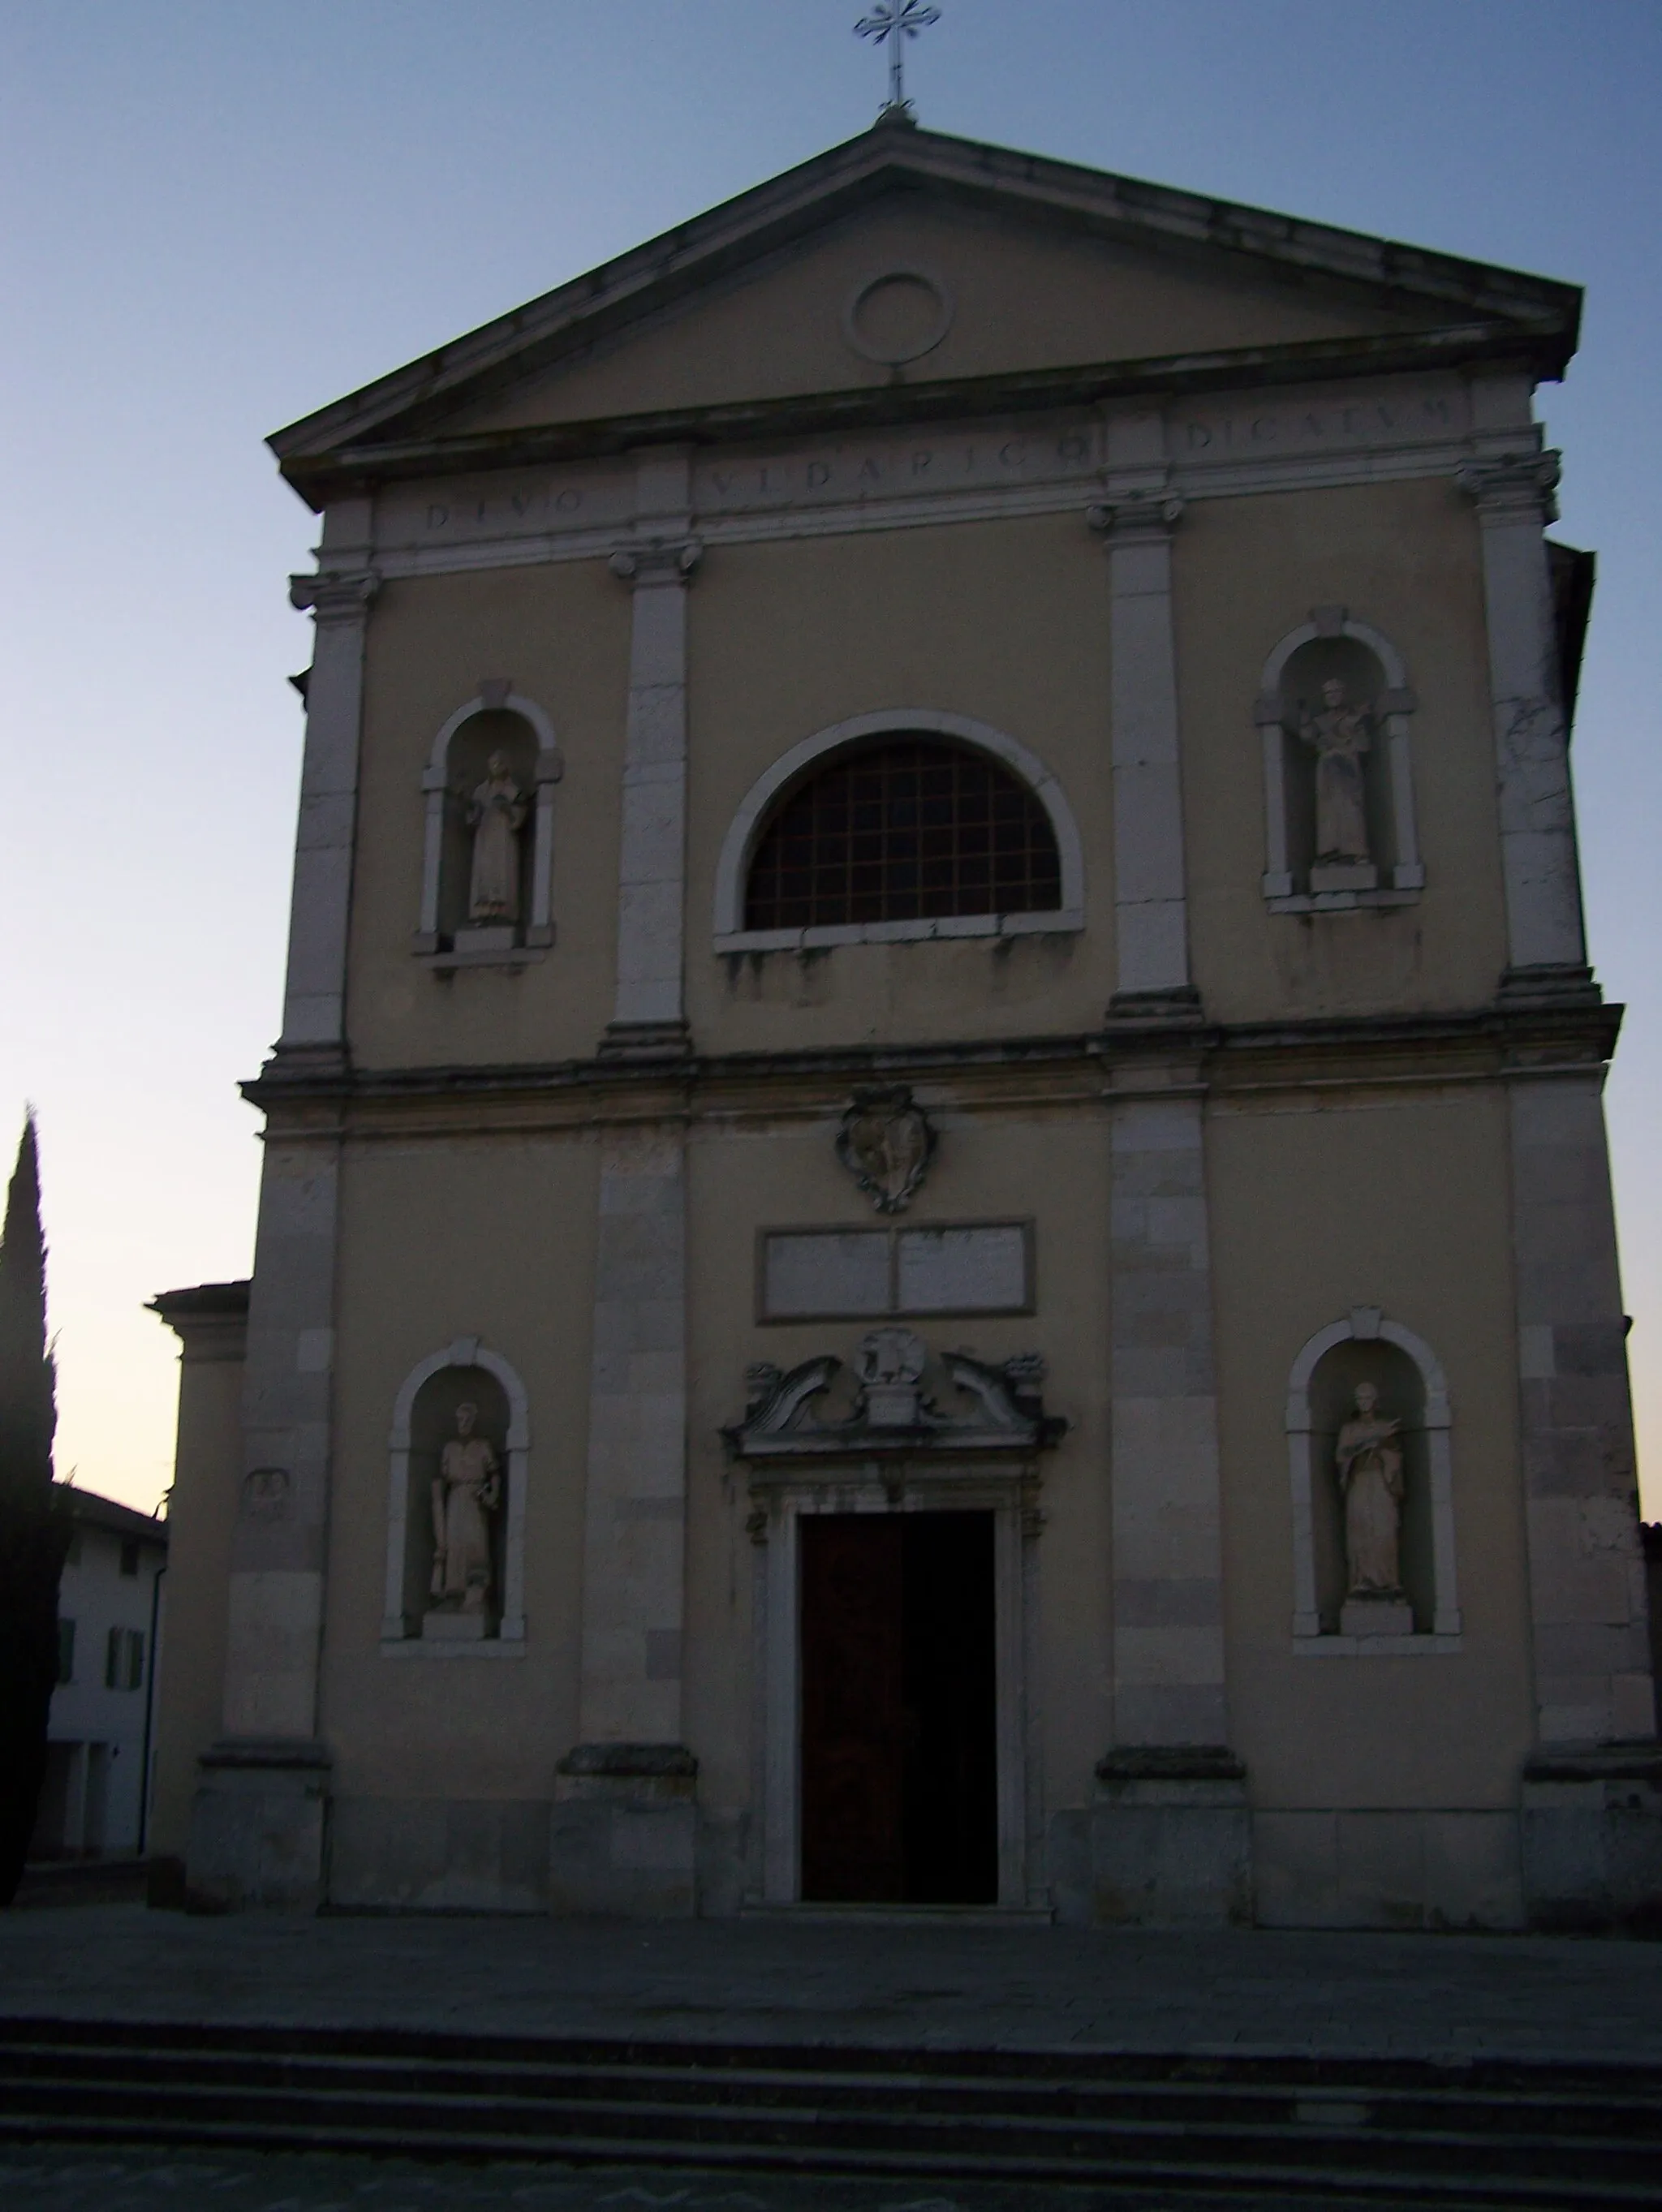 Photo showing: The church of Saint Ulrich in Aiello del Friuli, Udine, Italy